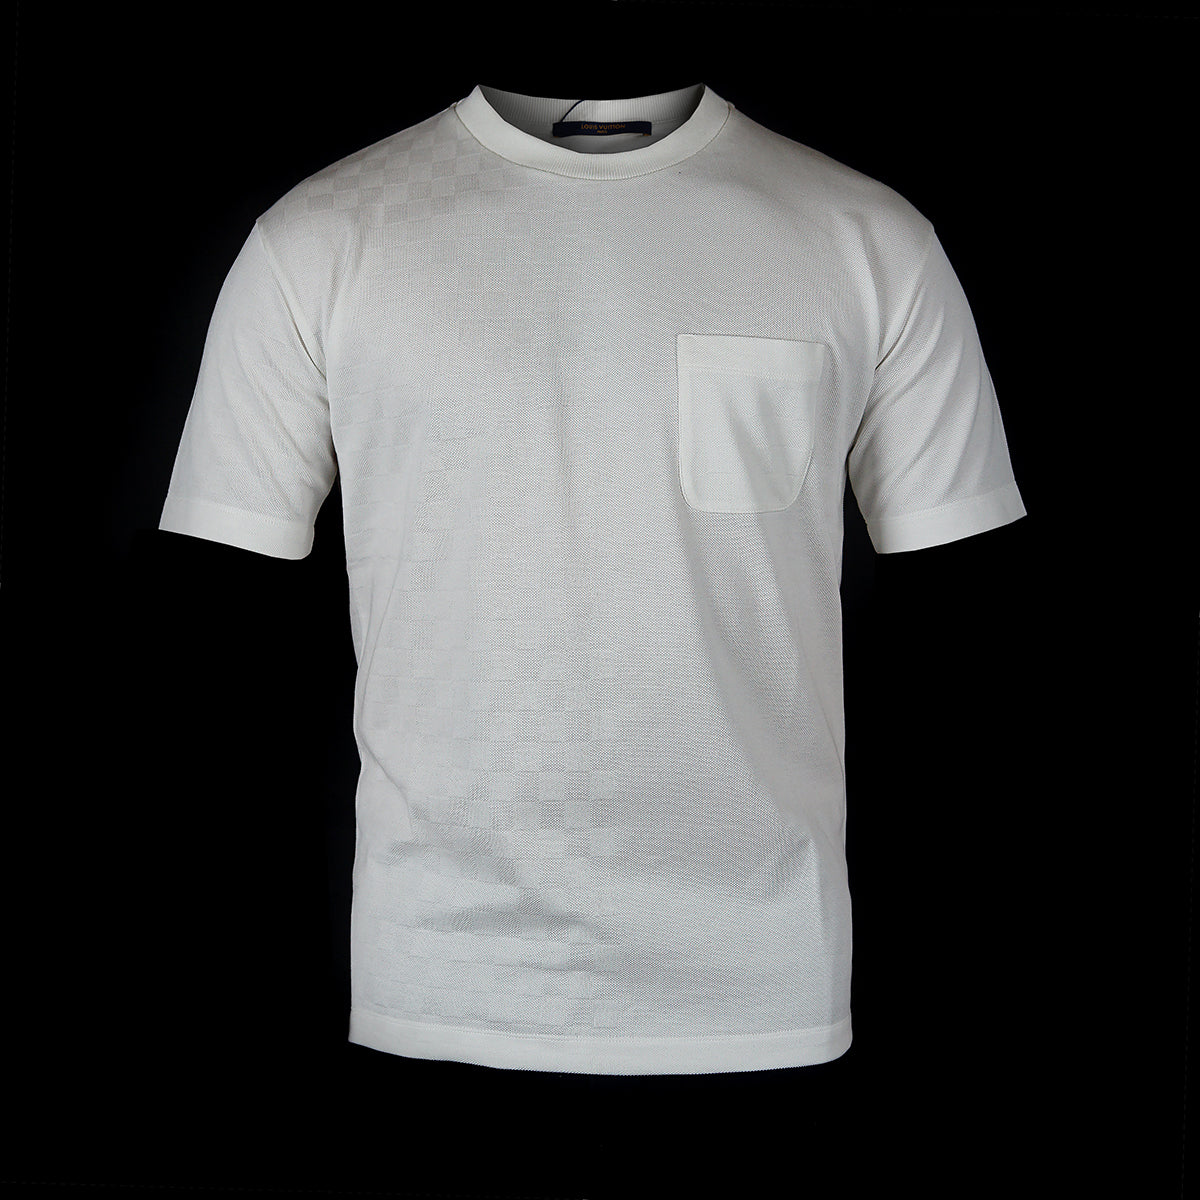 Louis Vuitton Damier T-shirt